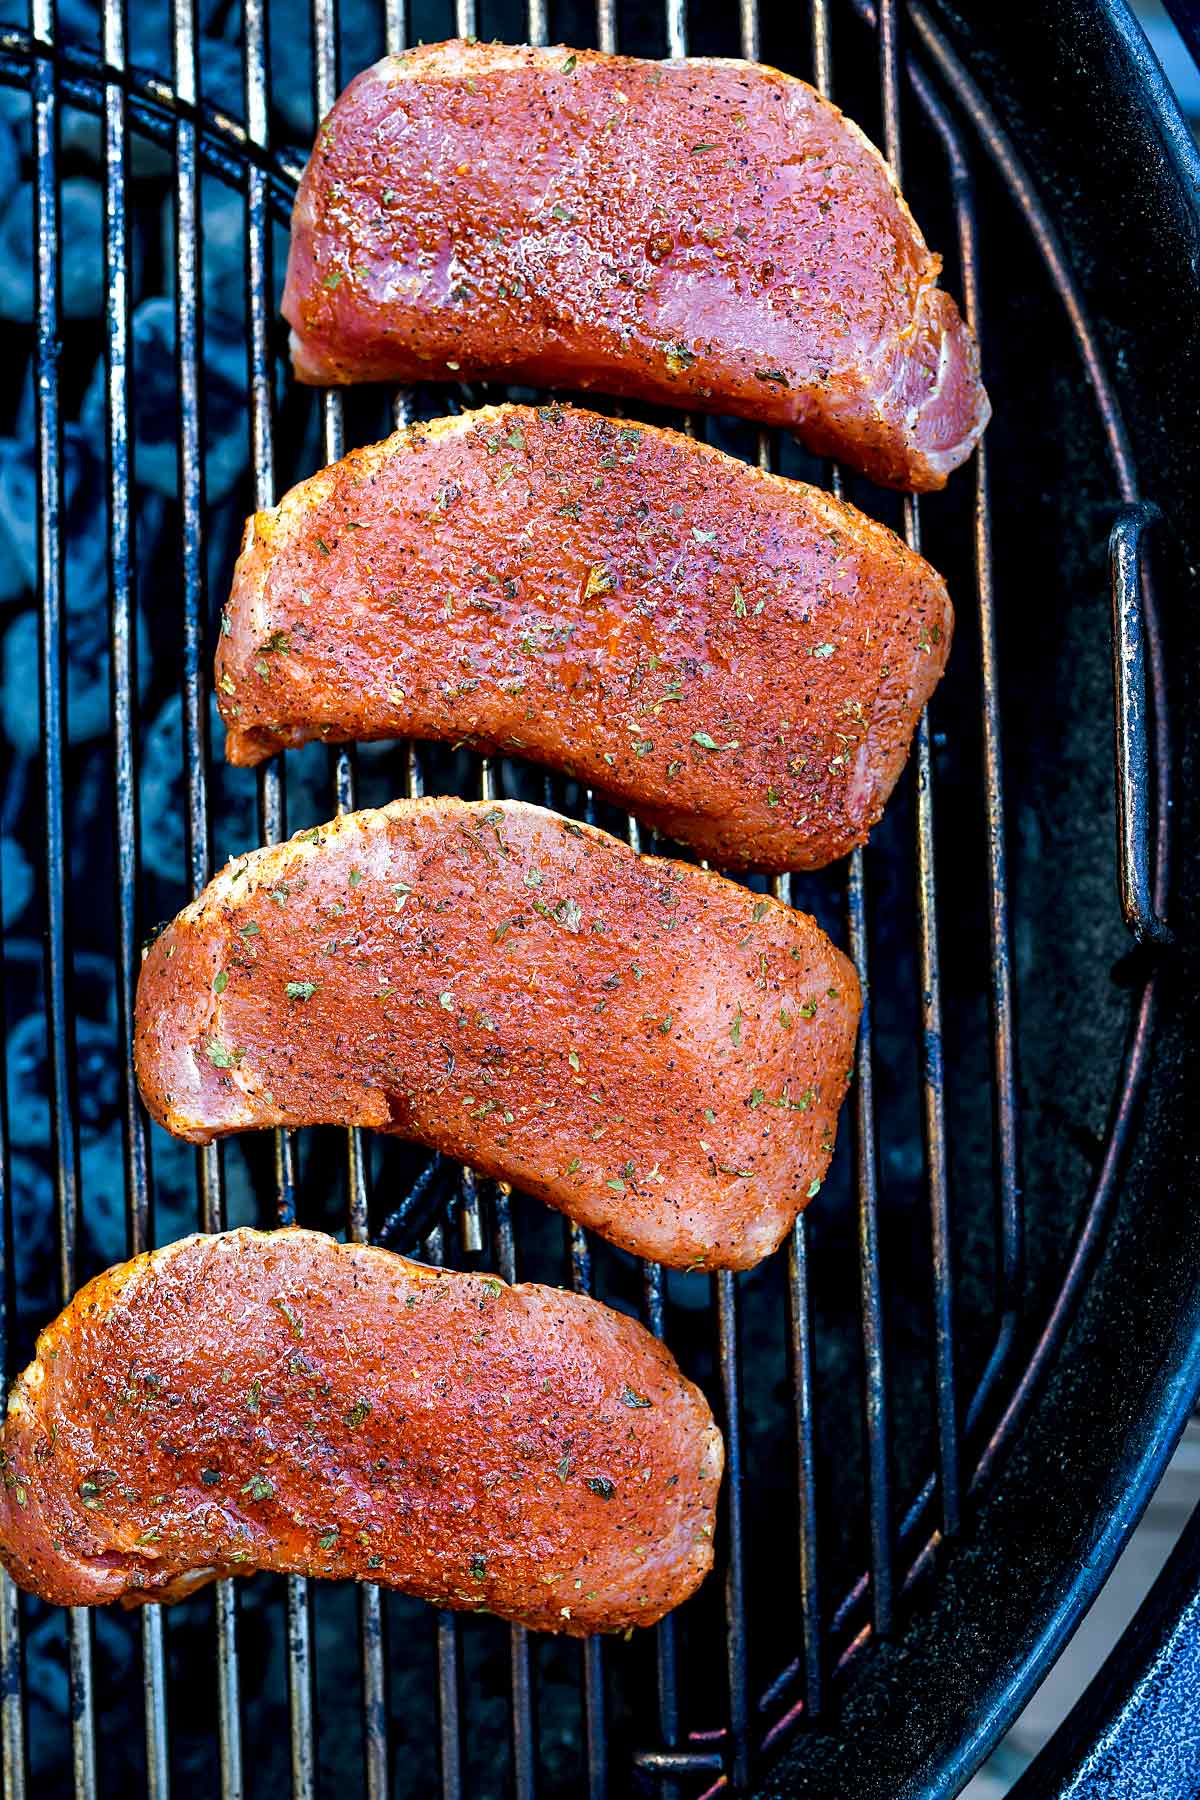 How to make grilled pork takeoutfood.best #porkchops #recipes #grilled